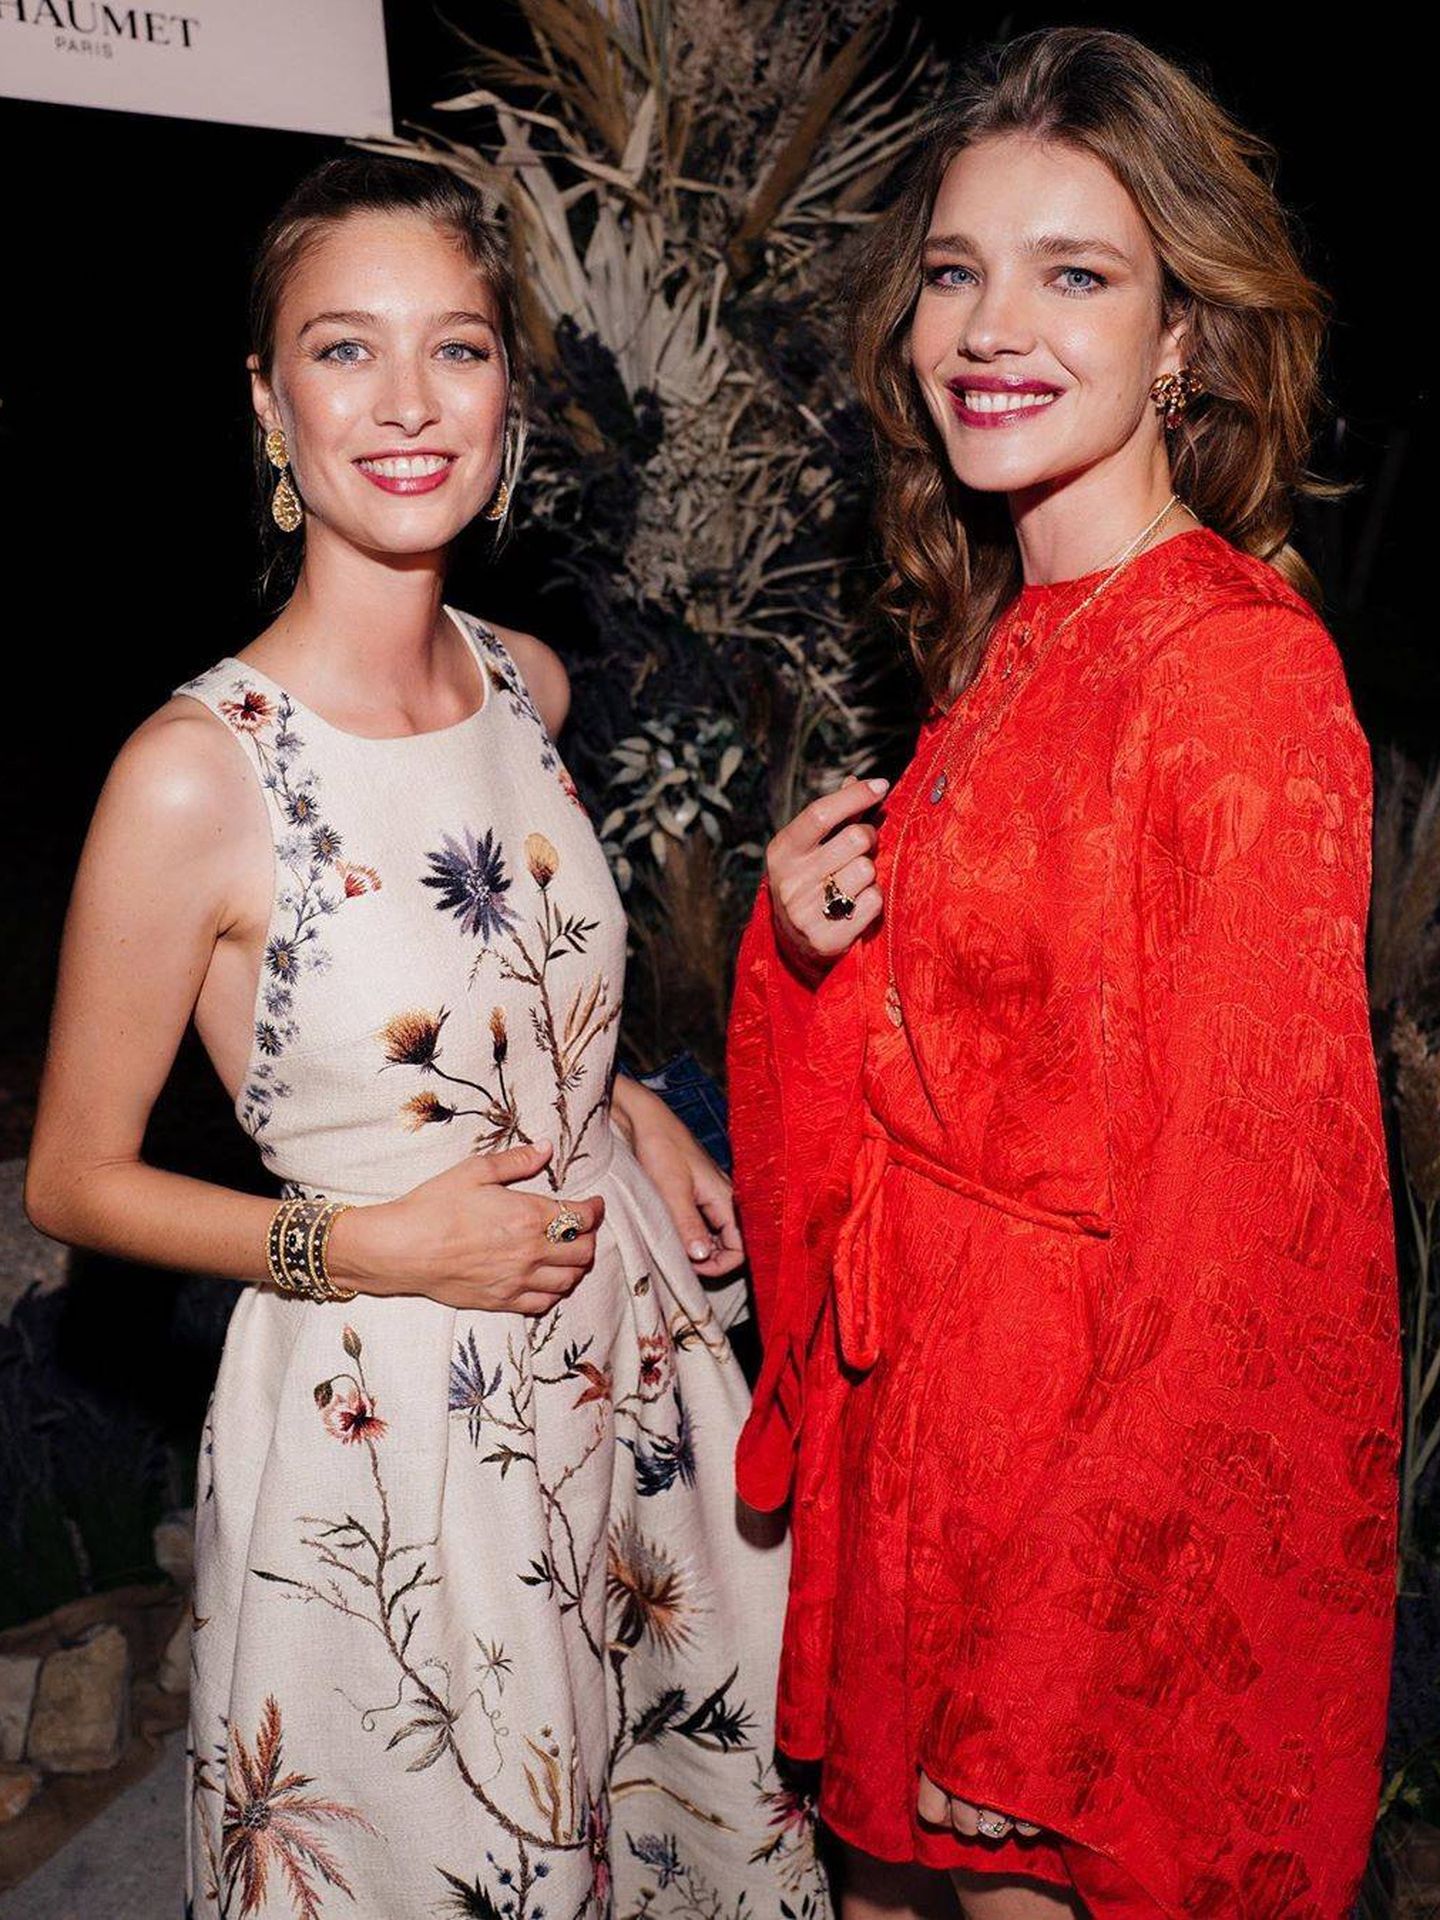 Beatrice Borromeo y la modelo Natalia Vodianova. (Instagram @natasupernova)